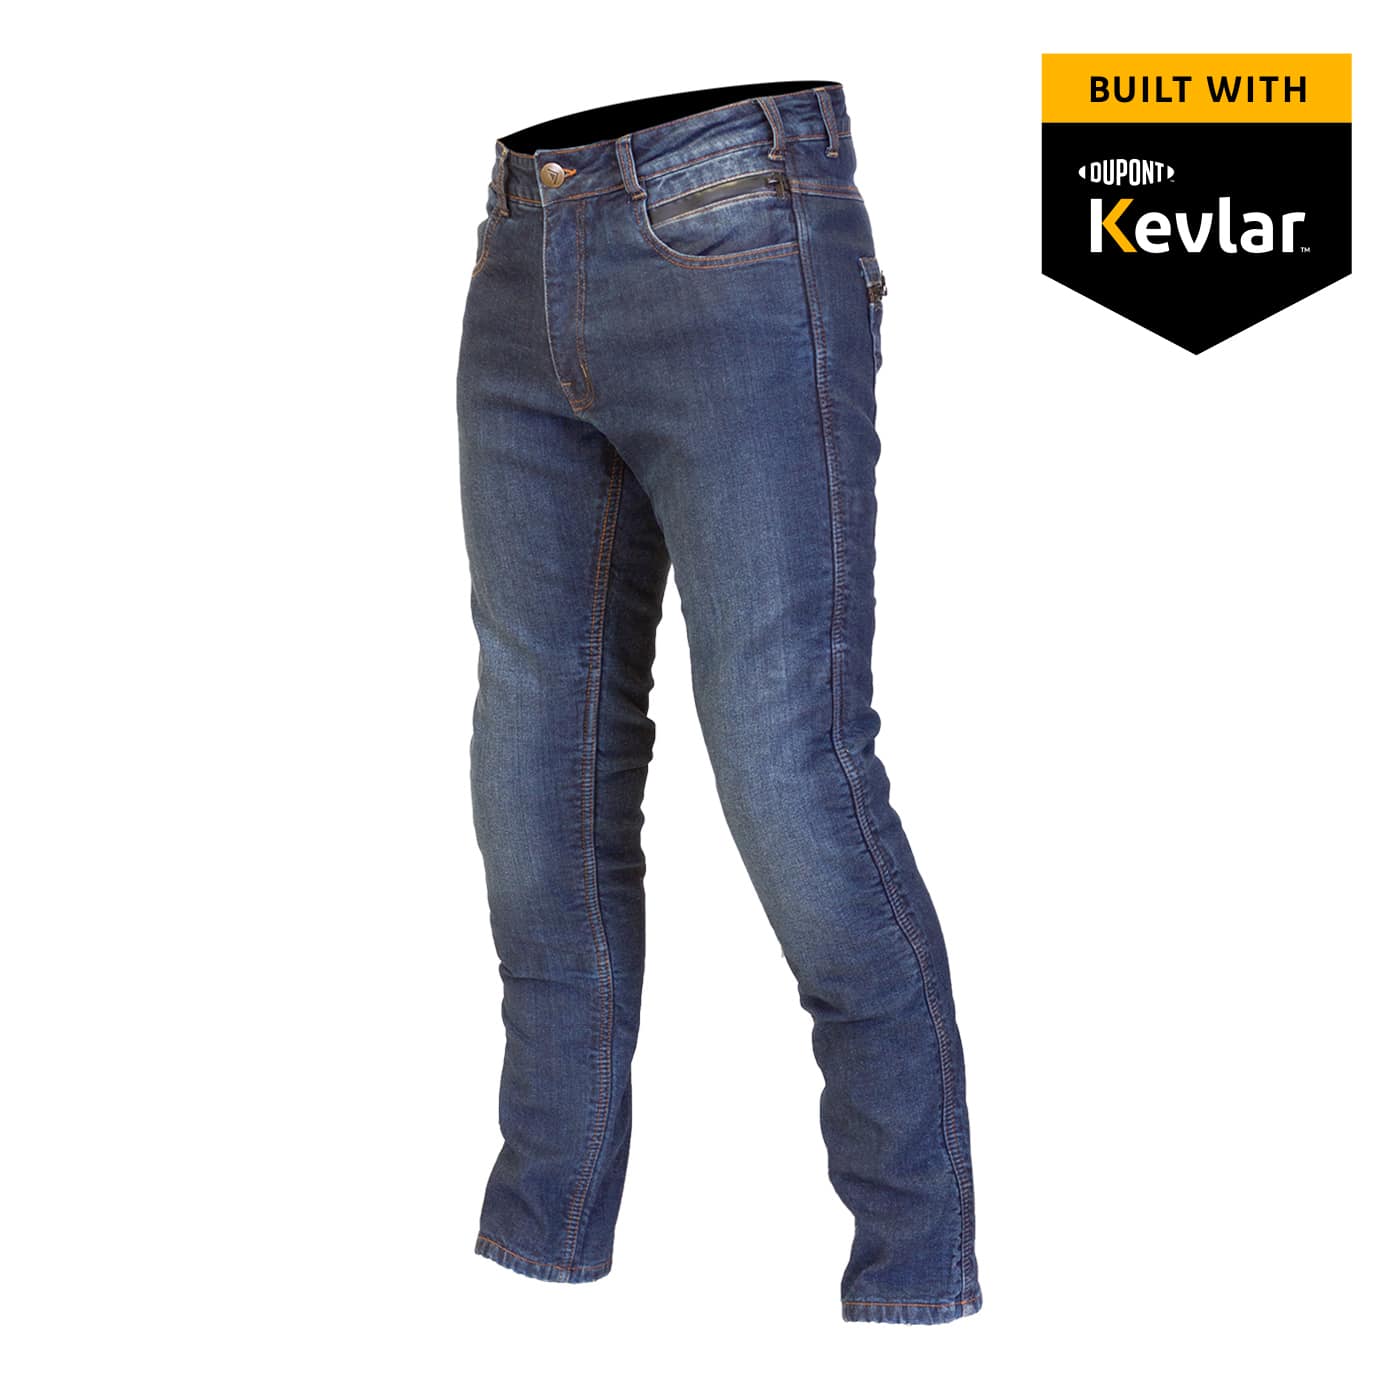 Single-layer motorcycle jeans vs Kevlar motorcycle jeans 